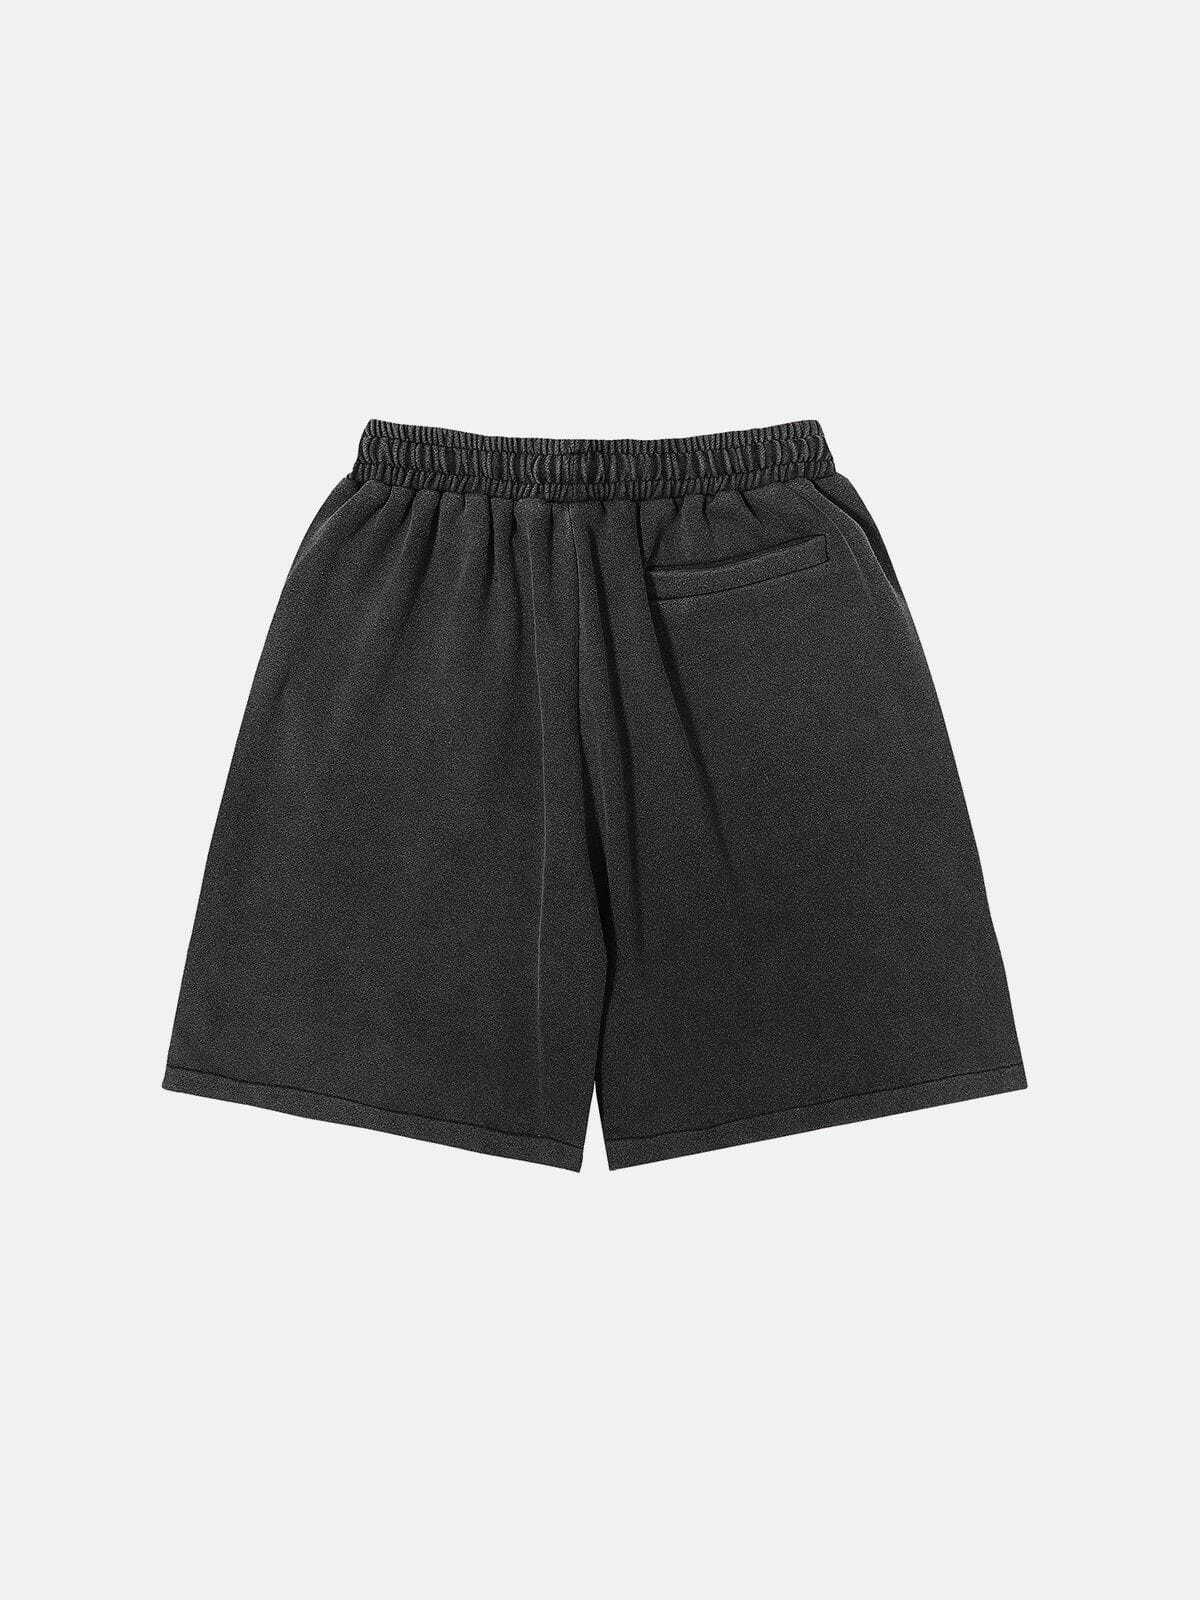 flame print drawstring shorts edgy y2k streetwear 7200